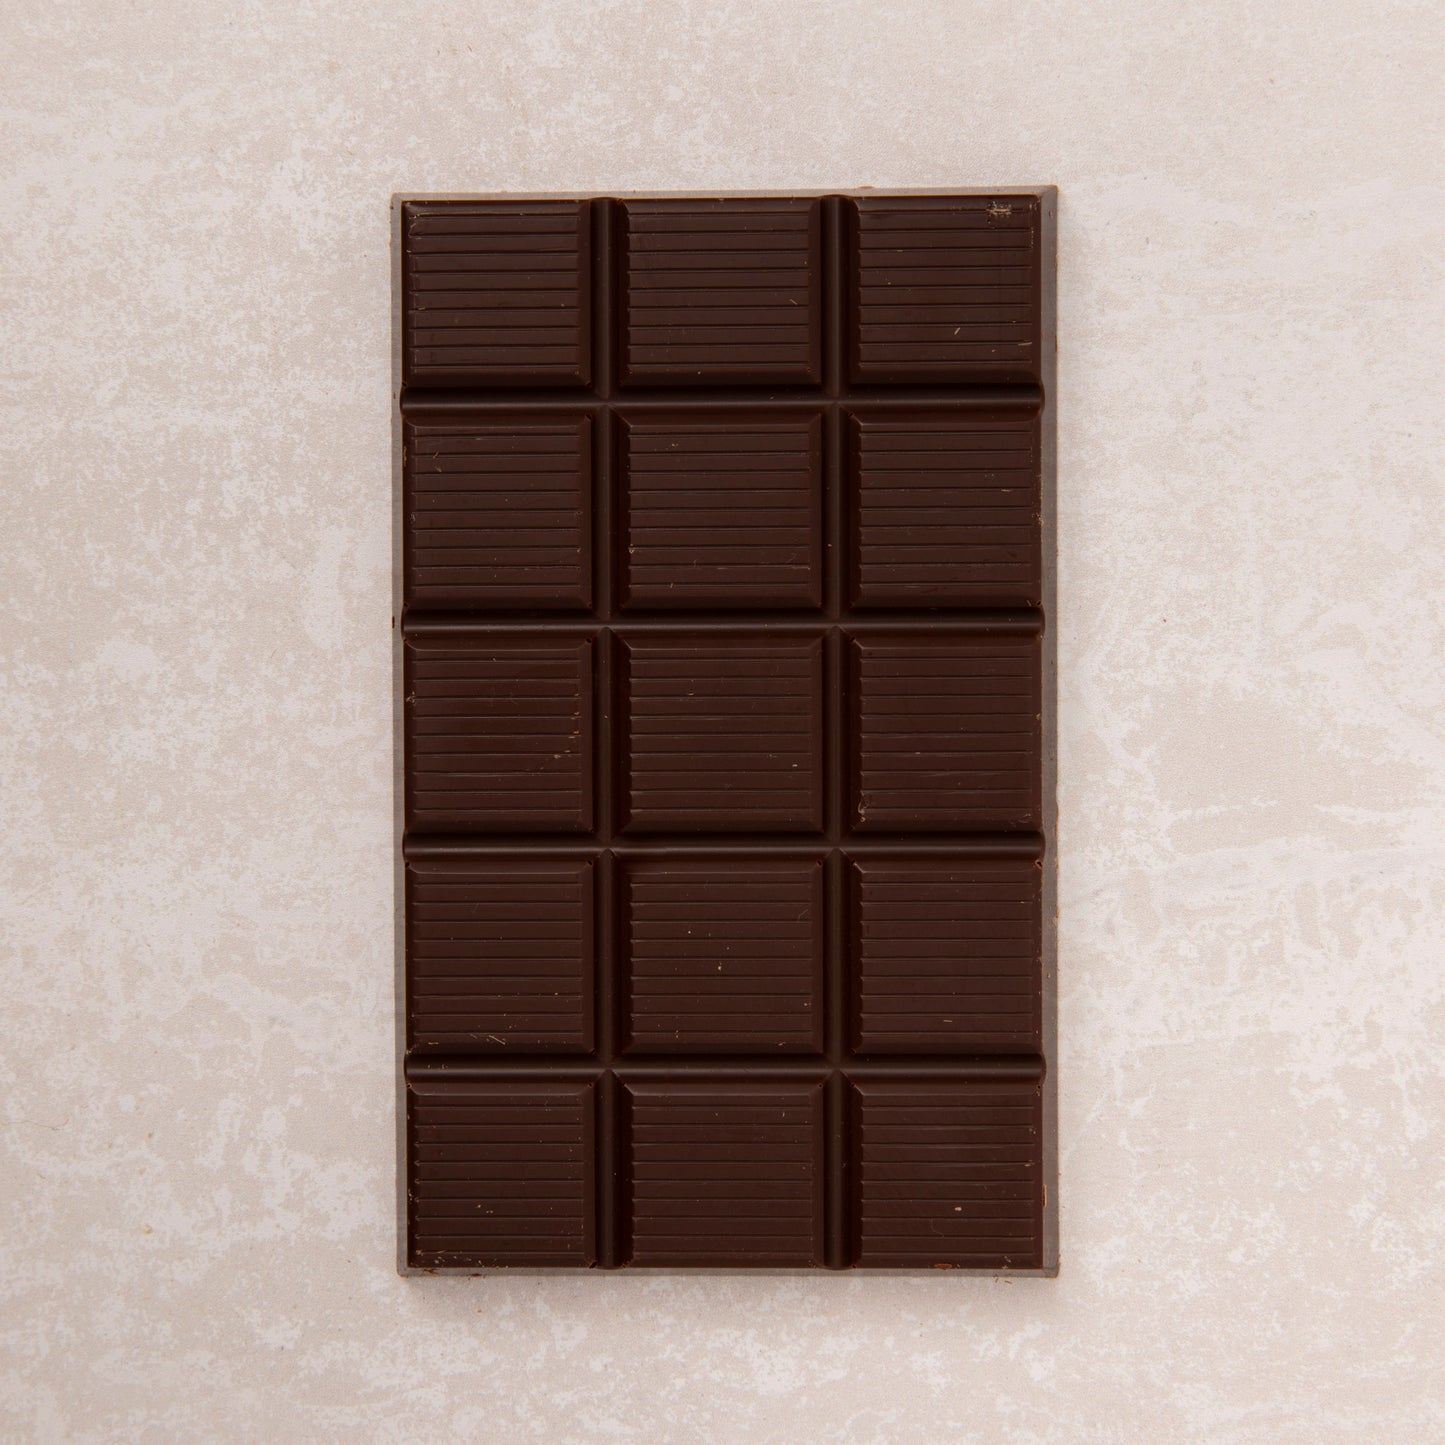 Single Origin 75% Tanzania Chocolate Block